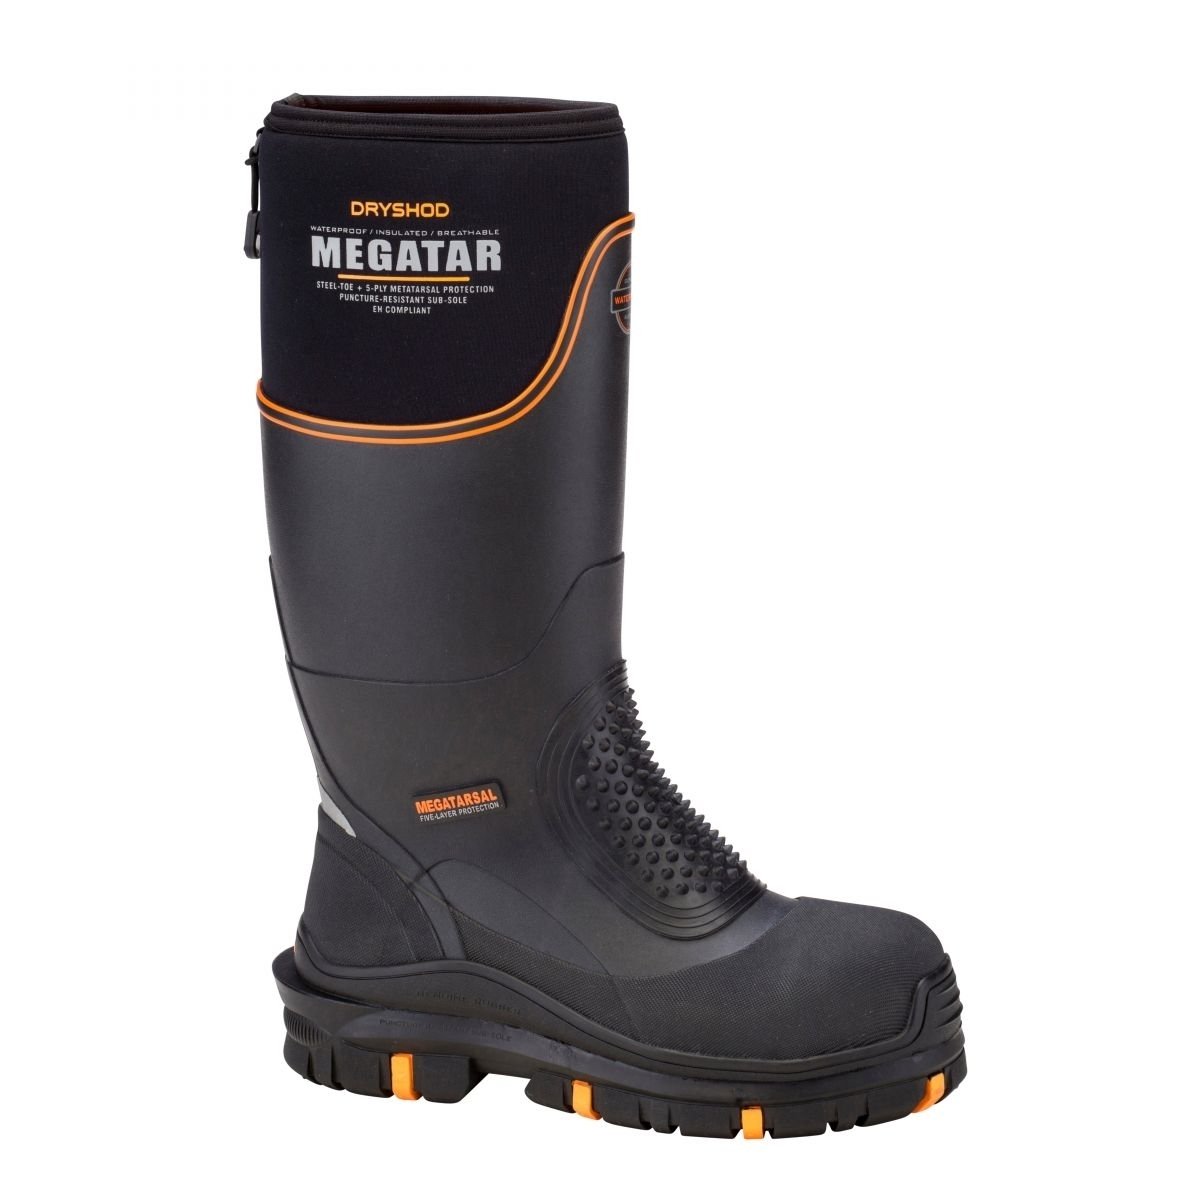 Dryshod Men's Megatar Steel Toe Metatarsal Guard Work Boot Black - MEG-MH-BK ONE SIZE BLACK/ORANGE - BLACK/ORANGE, 10